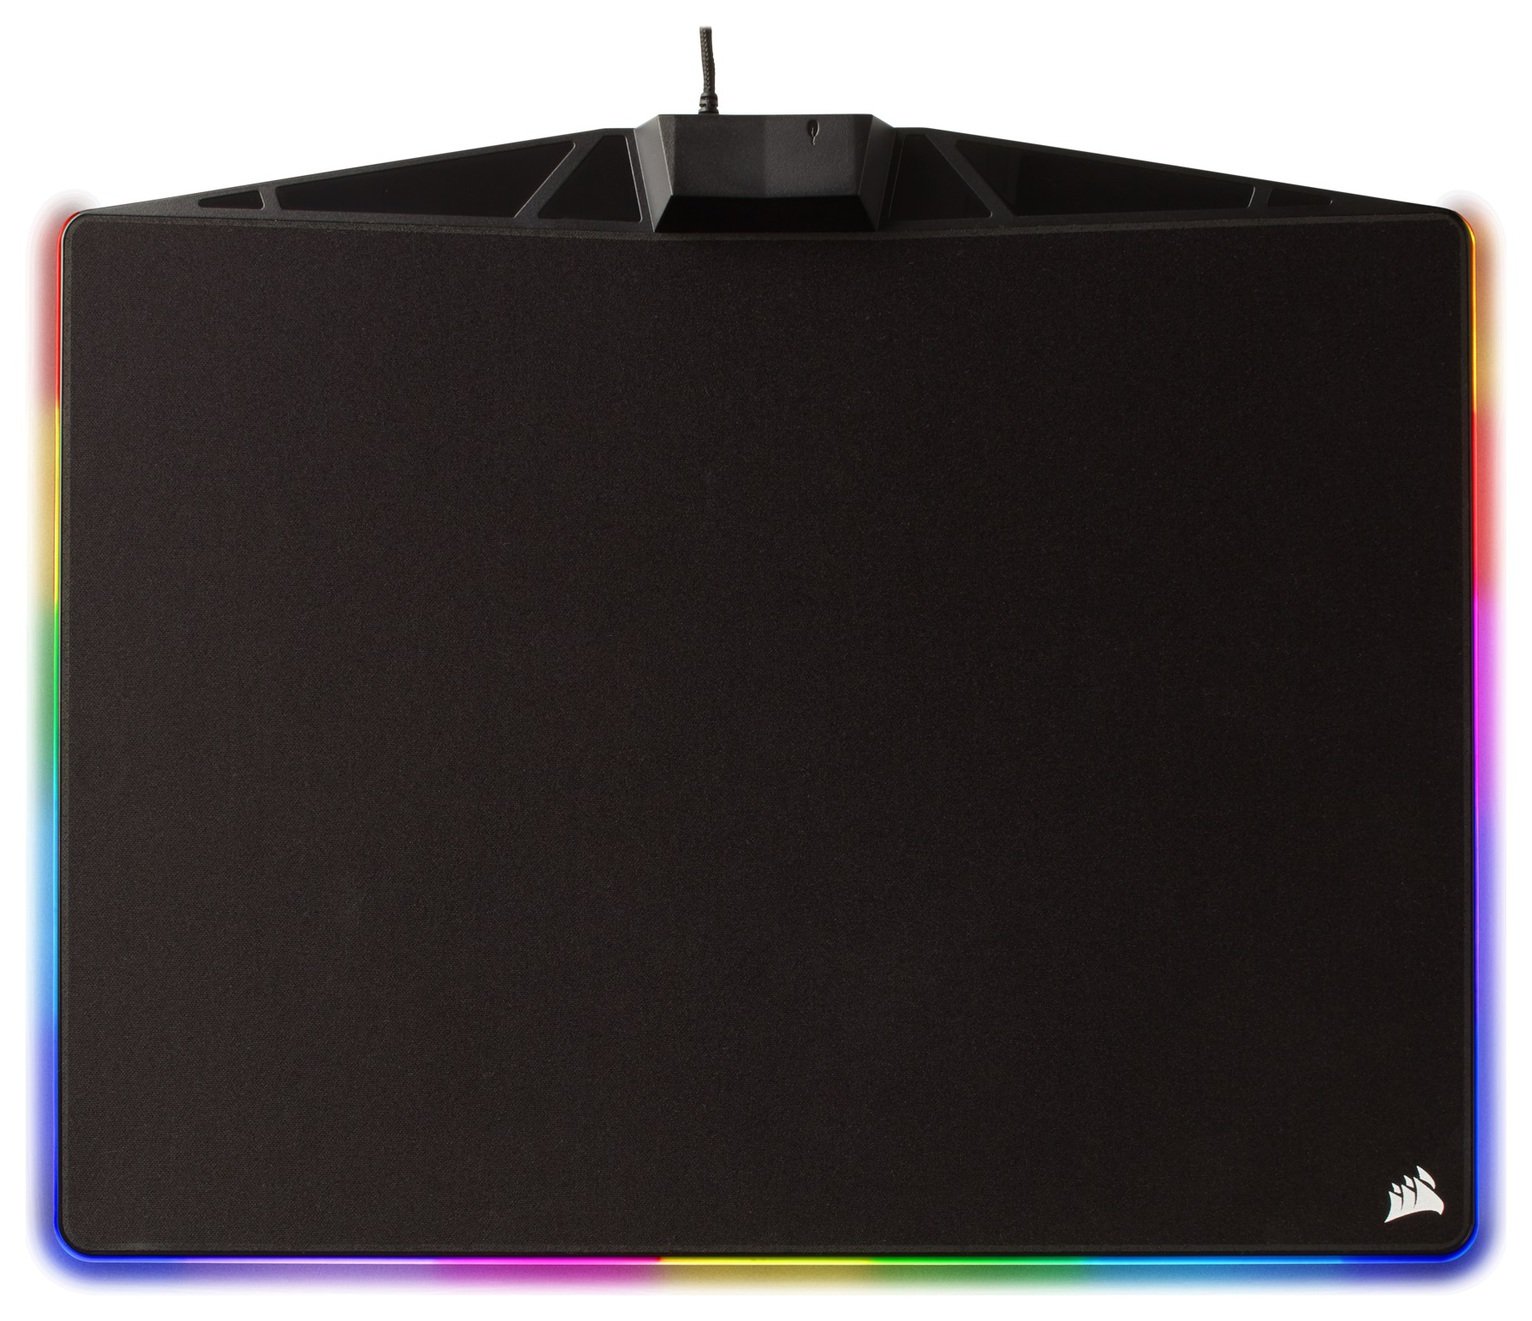 Corsair MM800C RGB Polaris Mouse Pad